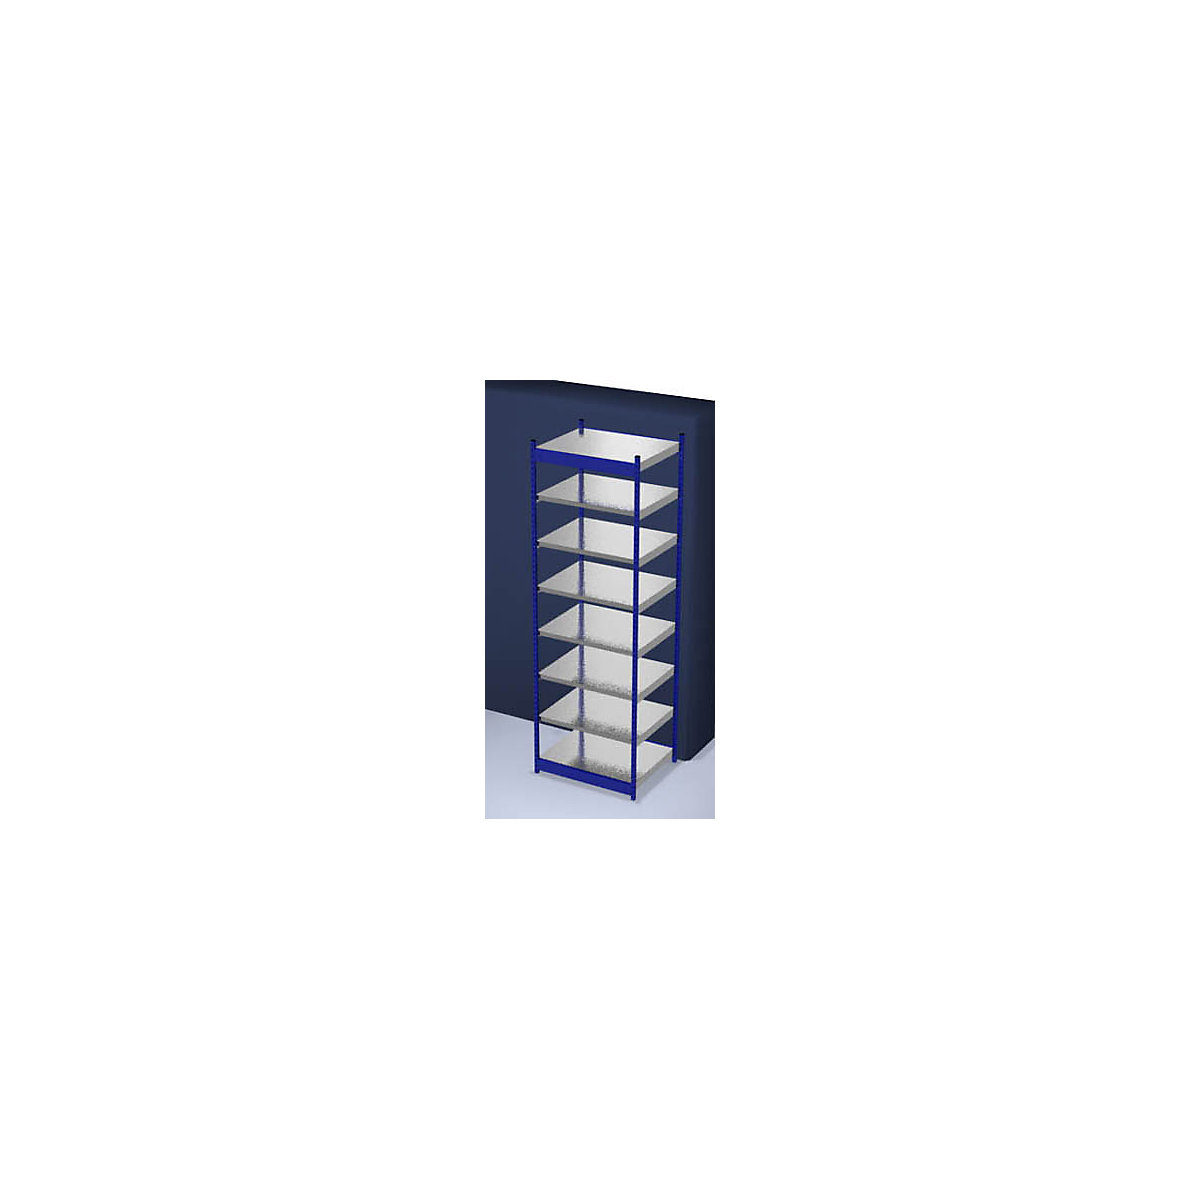 Stable boltless shelf unit, single sided – hofe, shelf unit height 3000 mm, blue / zinc-plated, shelf width 1025 mm, basic shelf unit, width x depth 1025 x 800 mm-6